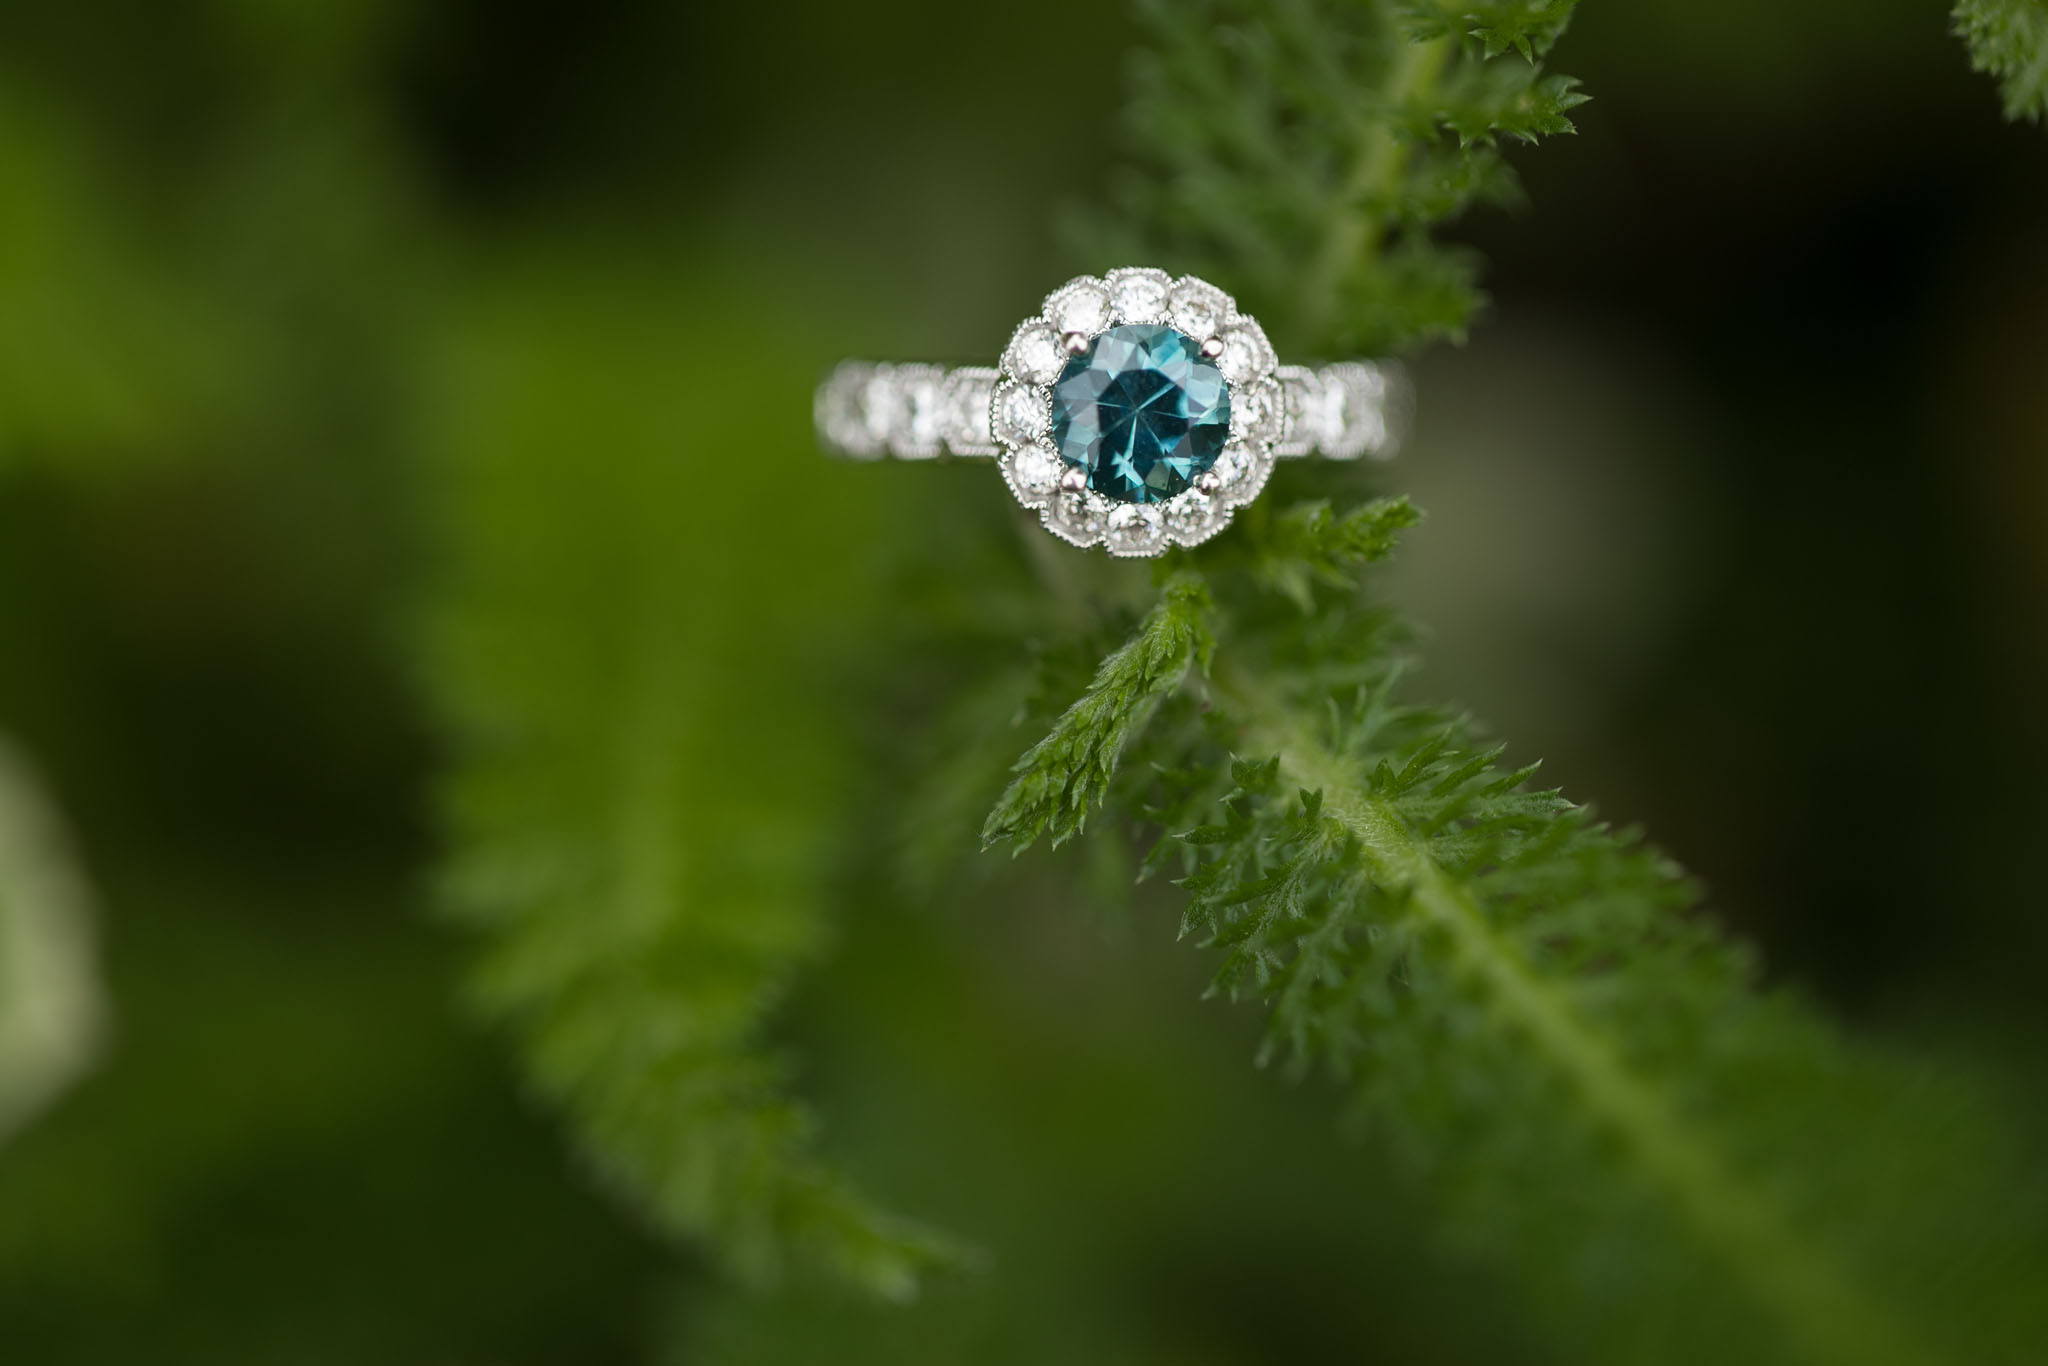 Montana Sapphire Ring